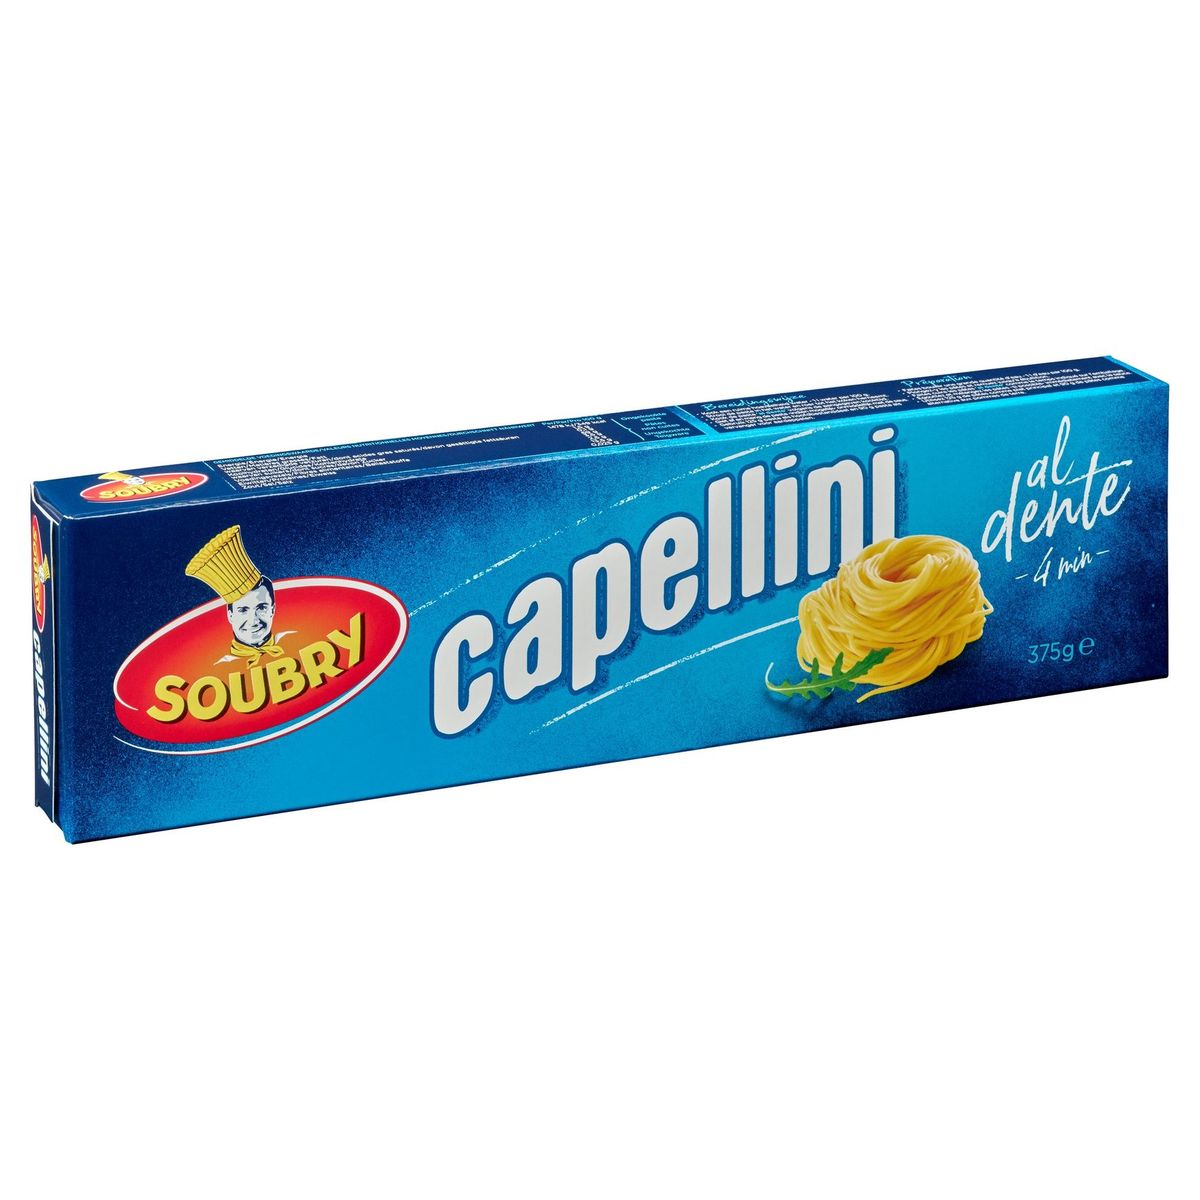 Soubry Pâtes Capellini 375g